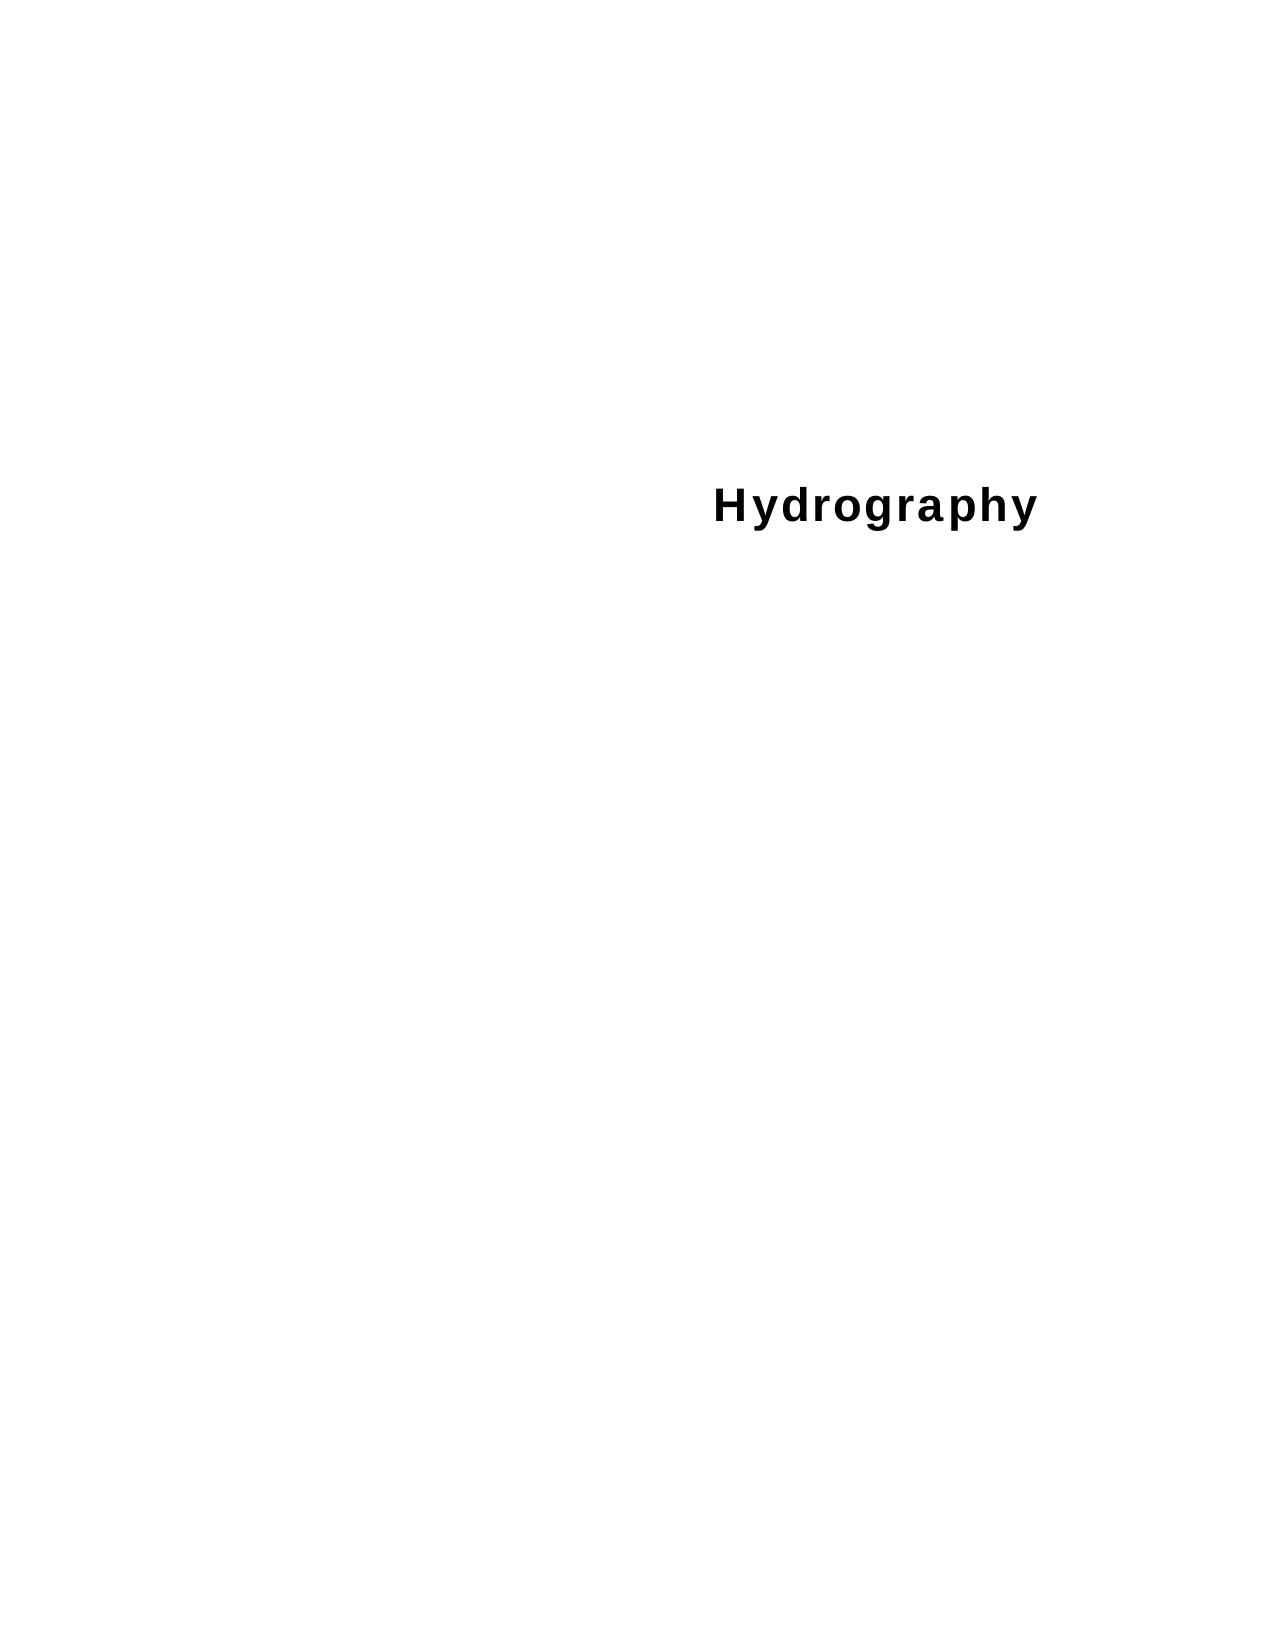 Microsoft Word - Hydrography_fullNew.doc